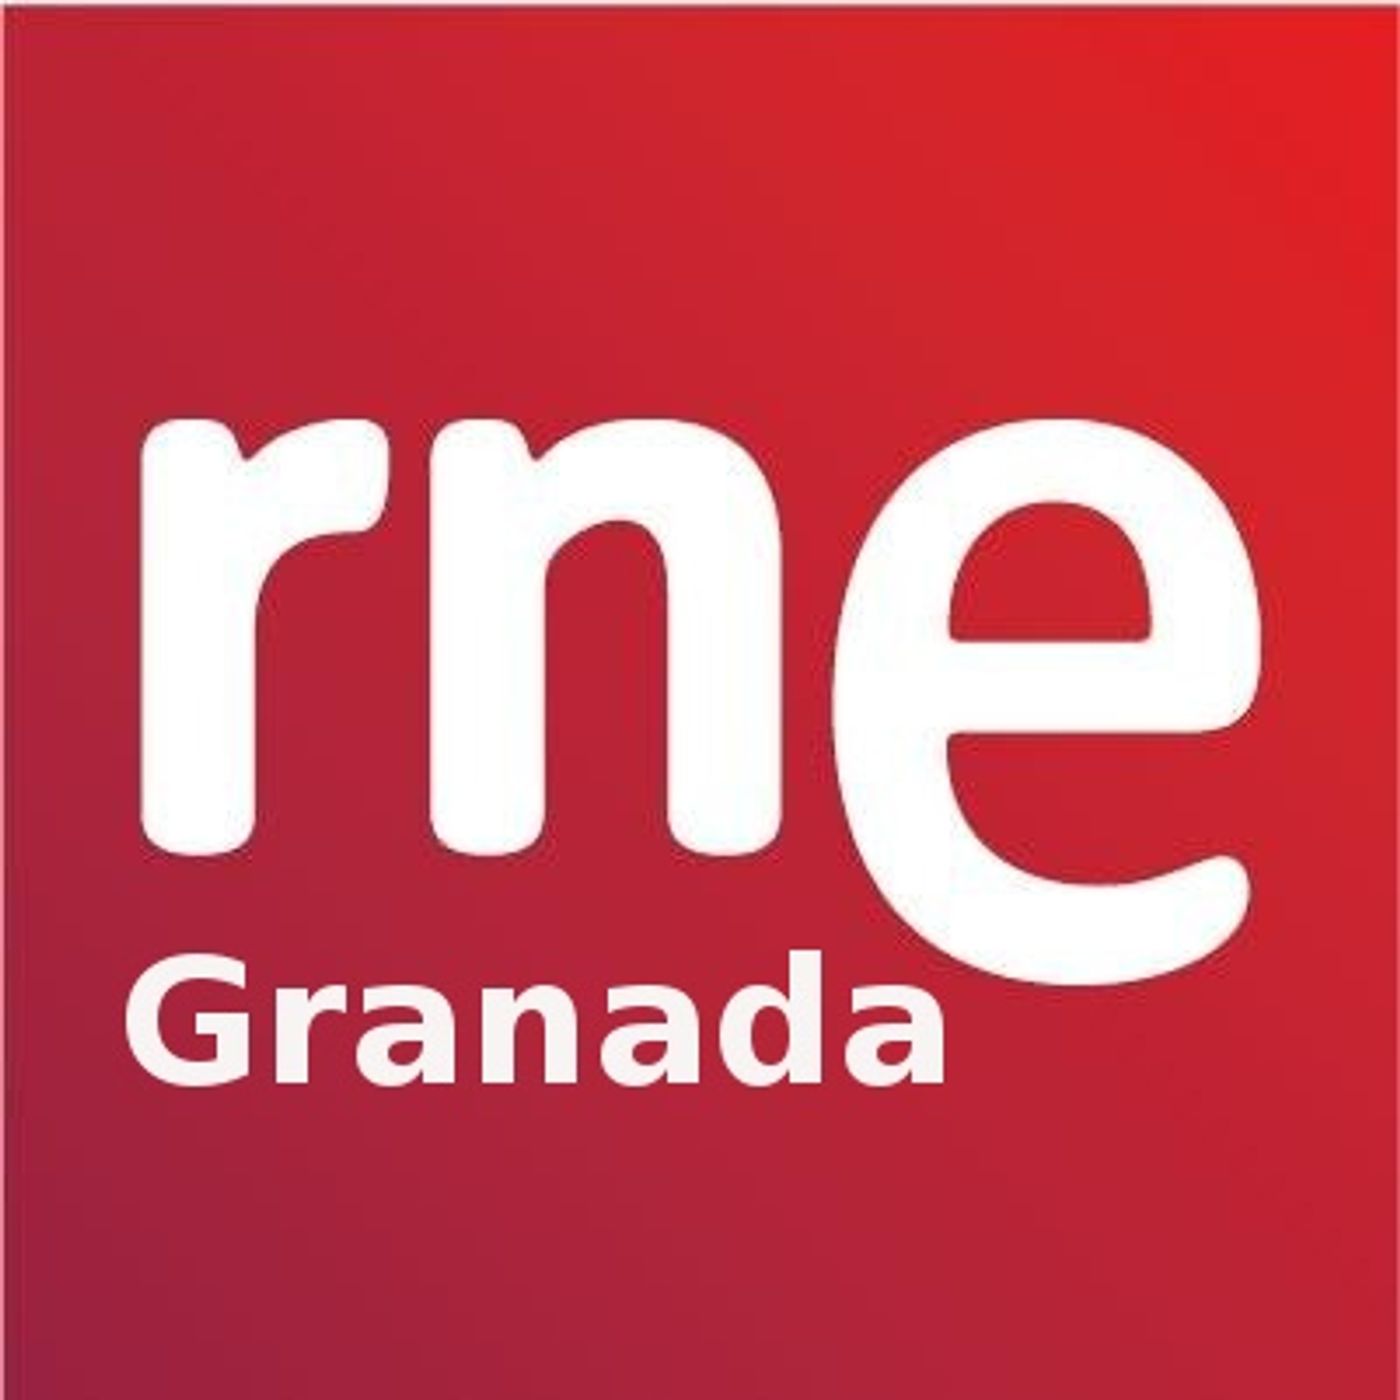 RNE Granada